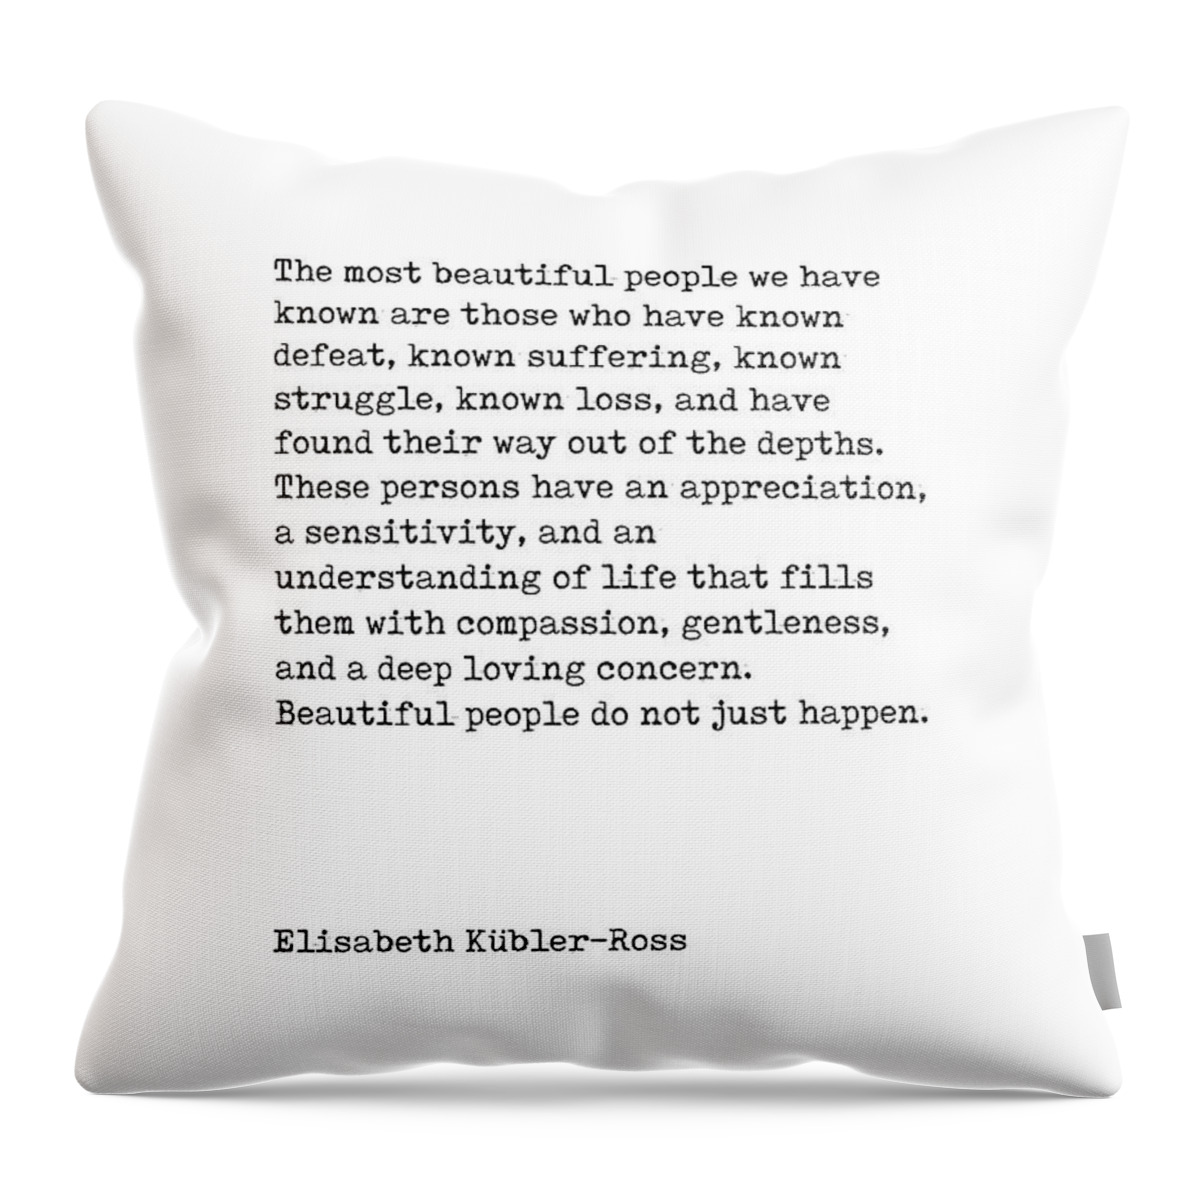 Elisabeth Kubler-ross Throw Pillow featuring the digital art The Most Beautiful People - Elisabeth Kubler-Ross Quote - Minimal, Typewriter Print - Inspiring by Studio Grafiikka